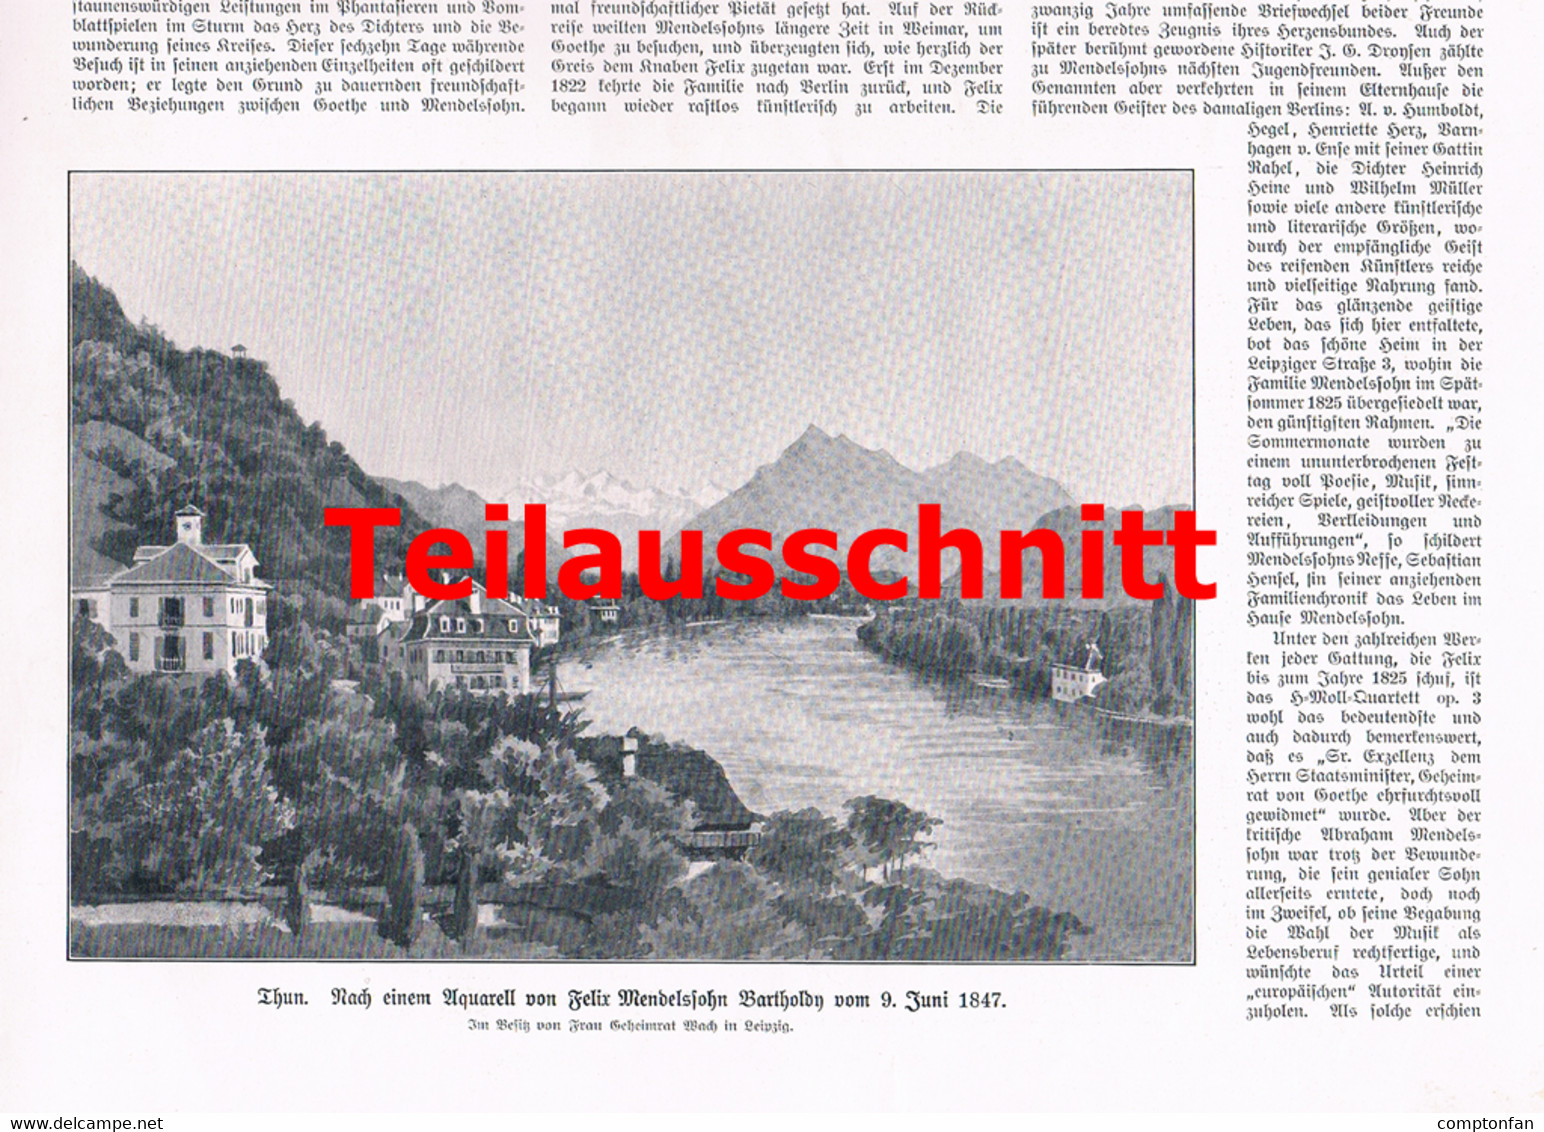 A102 058 - - Felix Mendelssohn Bartholdy Artikel Mit Bildern Großbild 27 X 38 Cm Druck 1909 - Musik